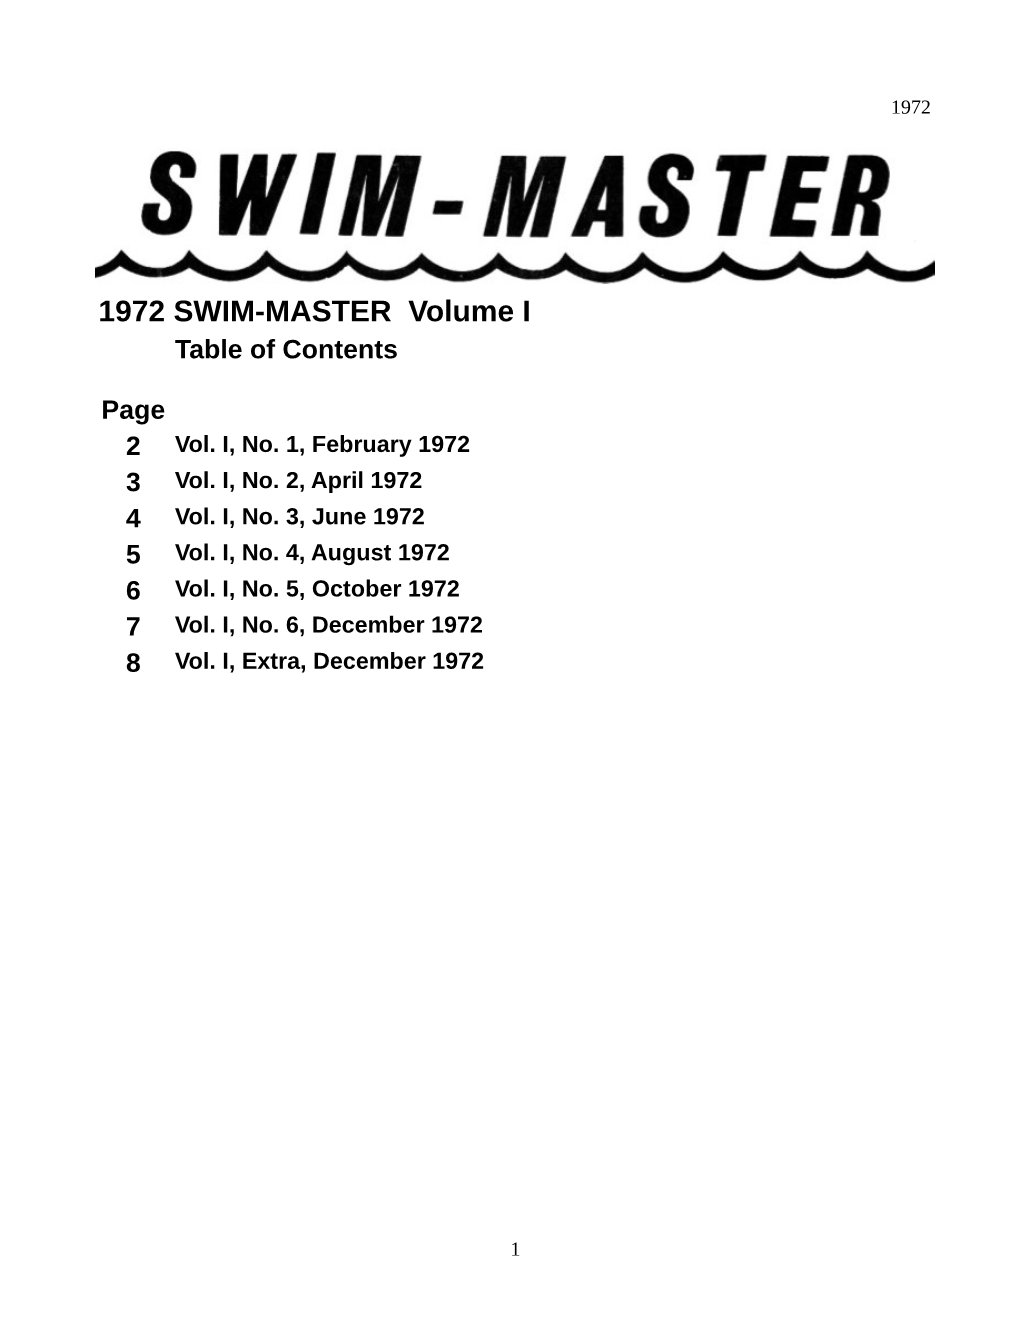 1972 SWIM-MASTER Volume I Table of Contents